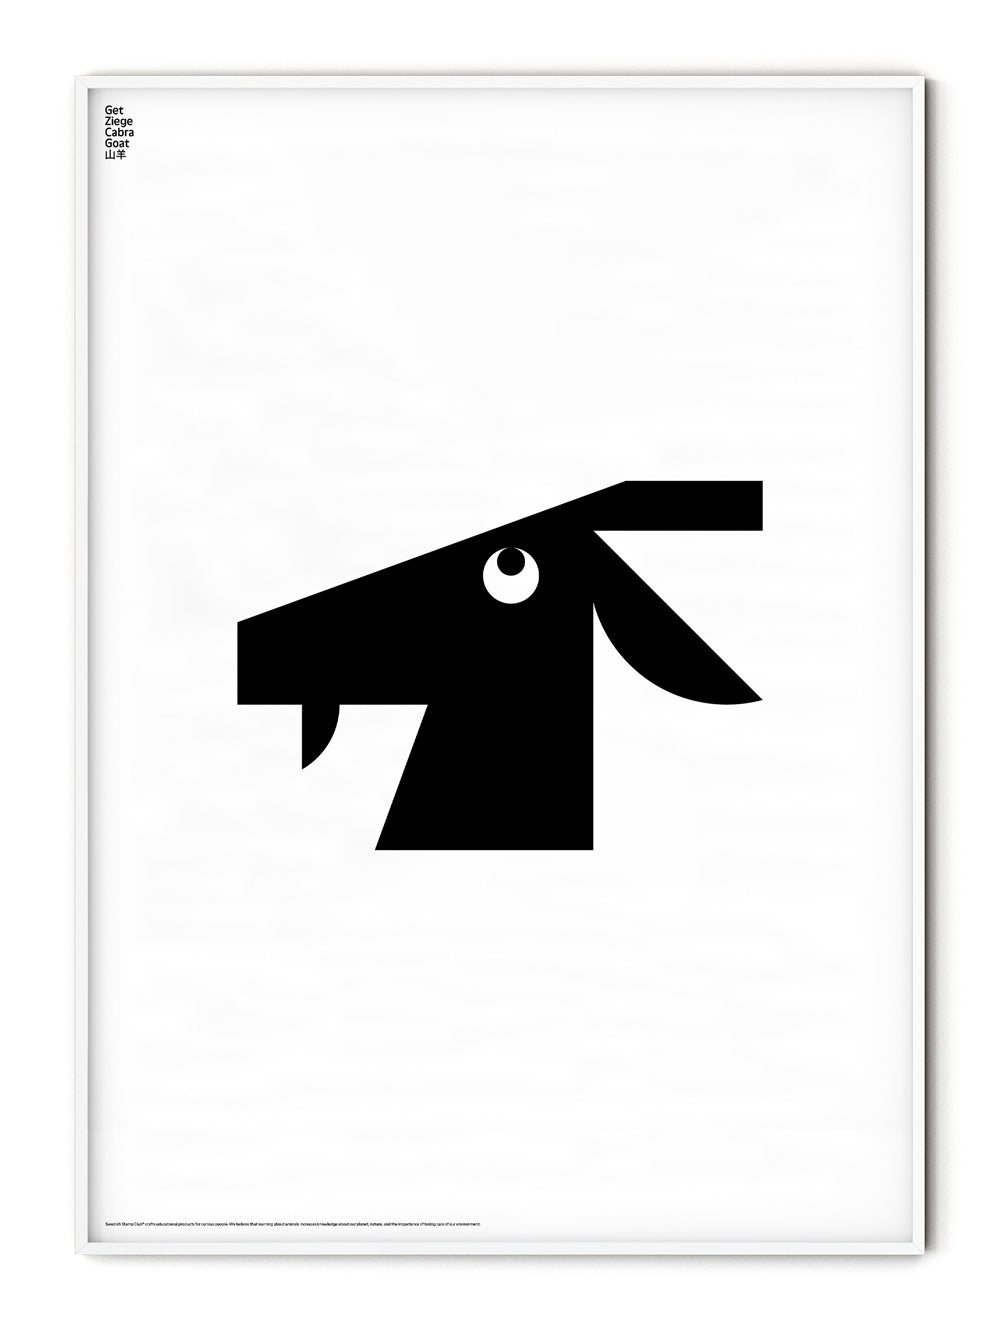 Animal Goat Poster